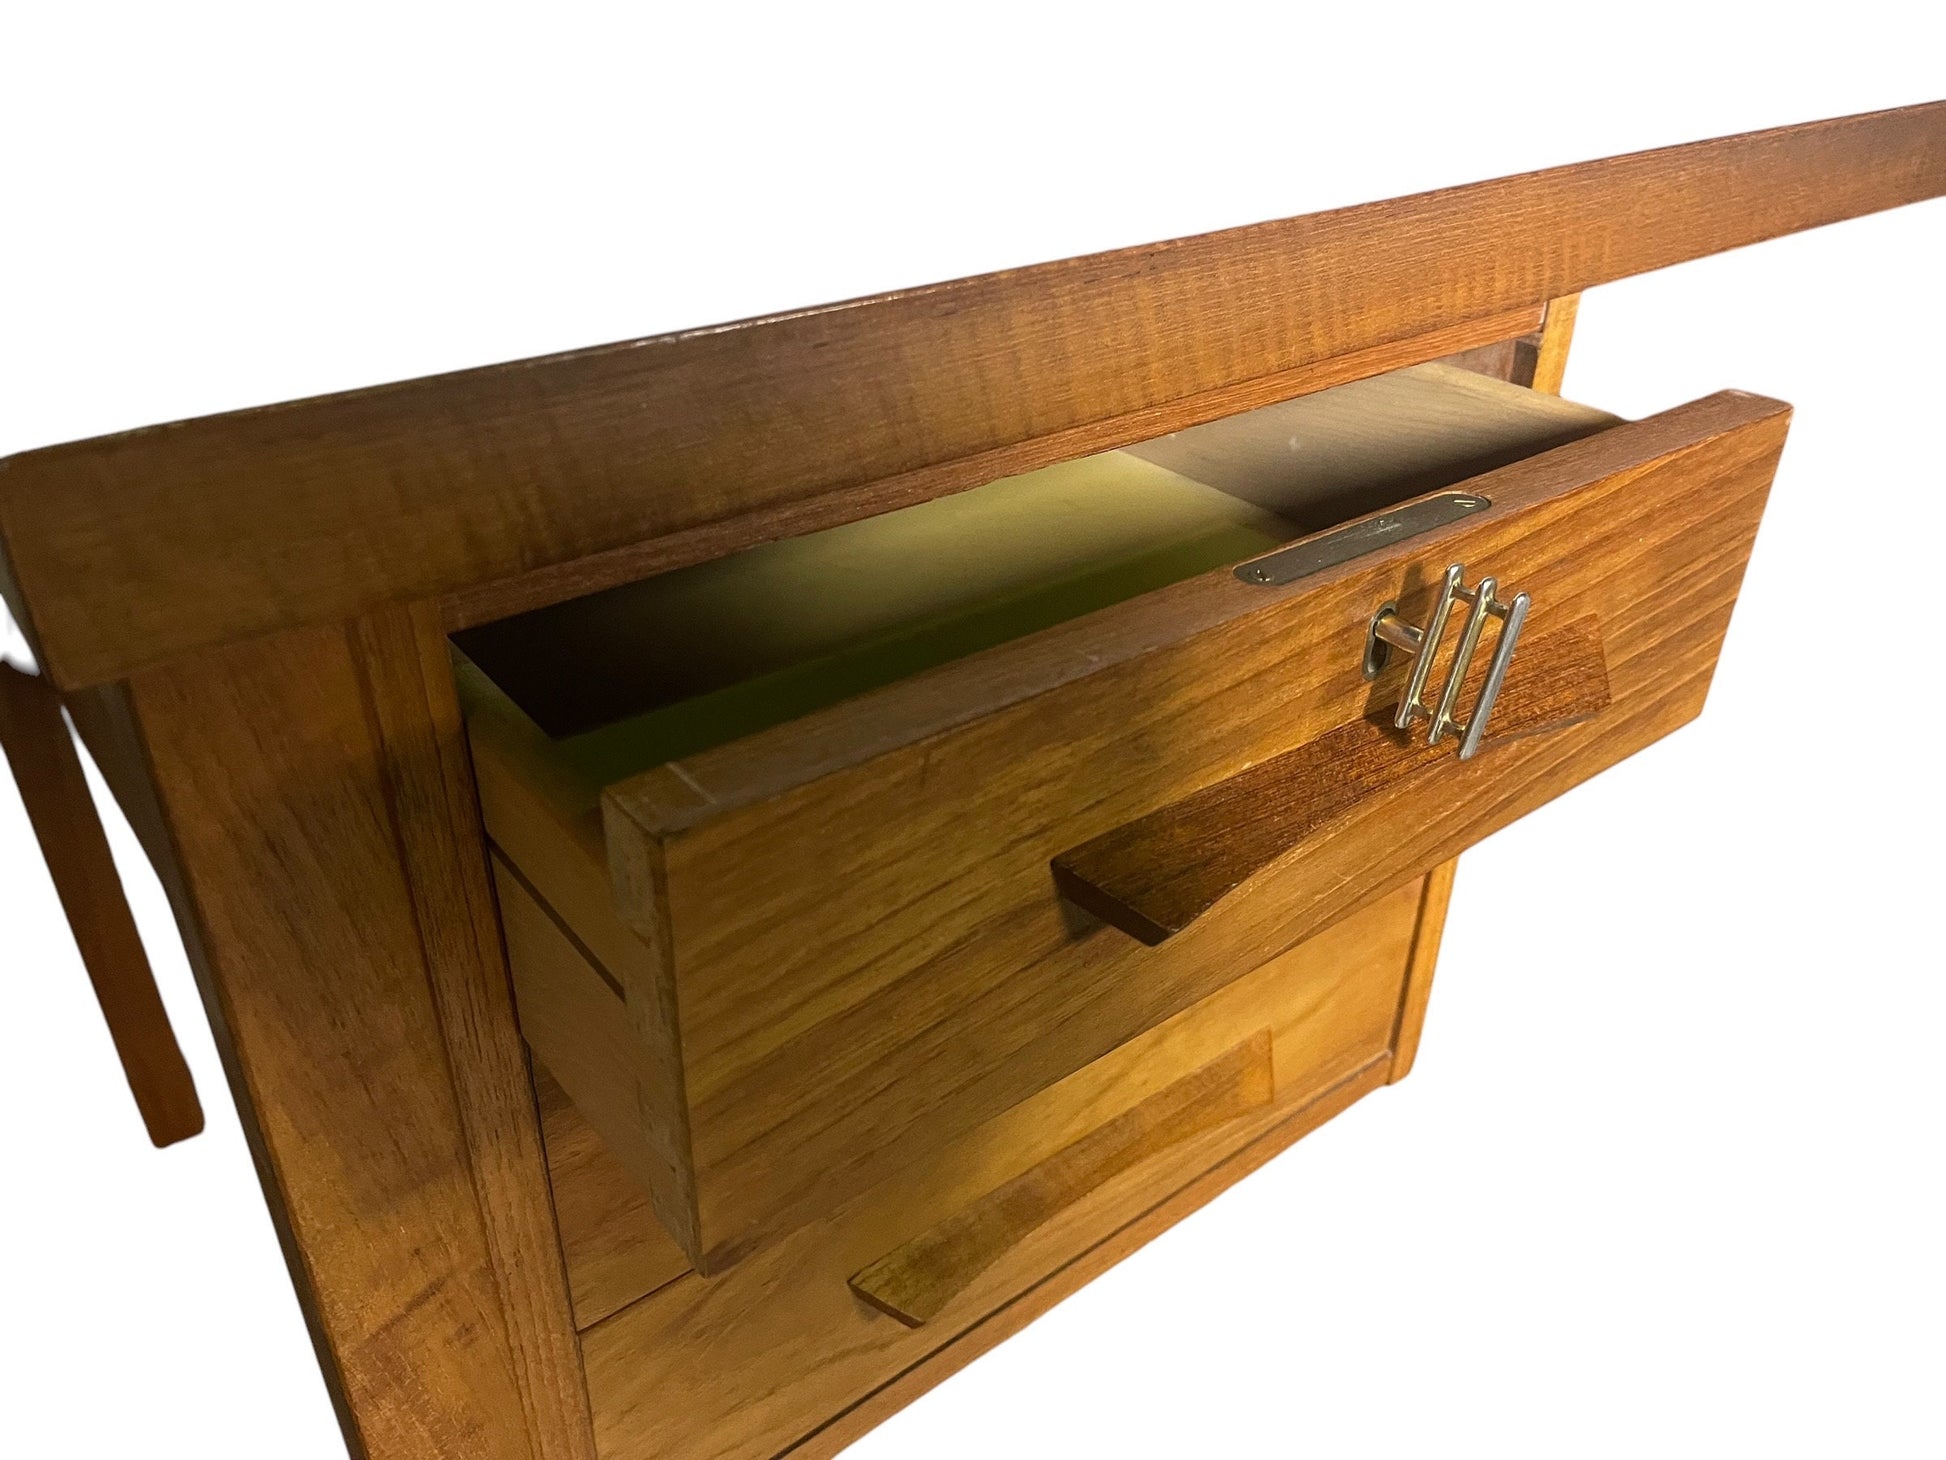 Mid-Century Modern teak Desk with 3 drawers 1960's